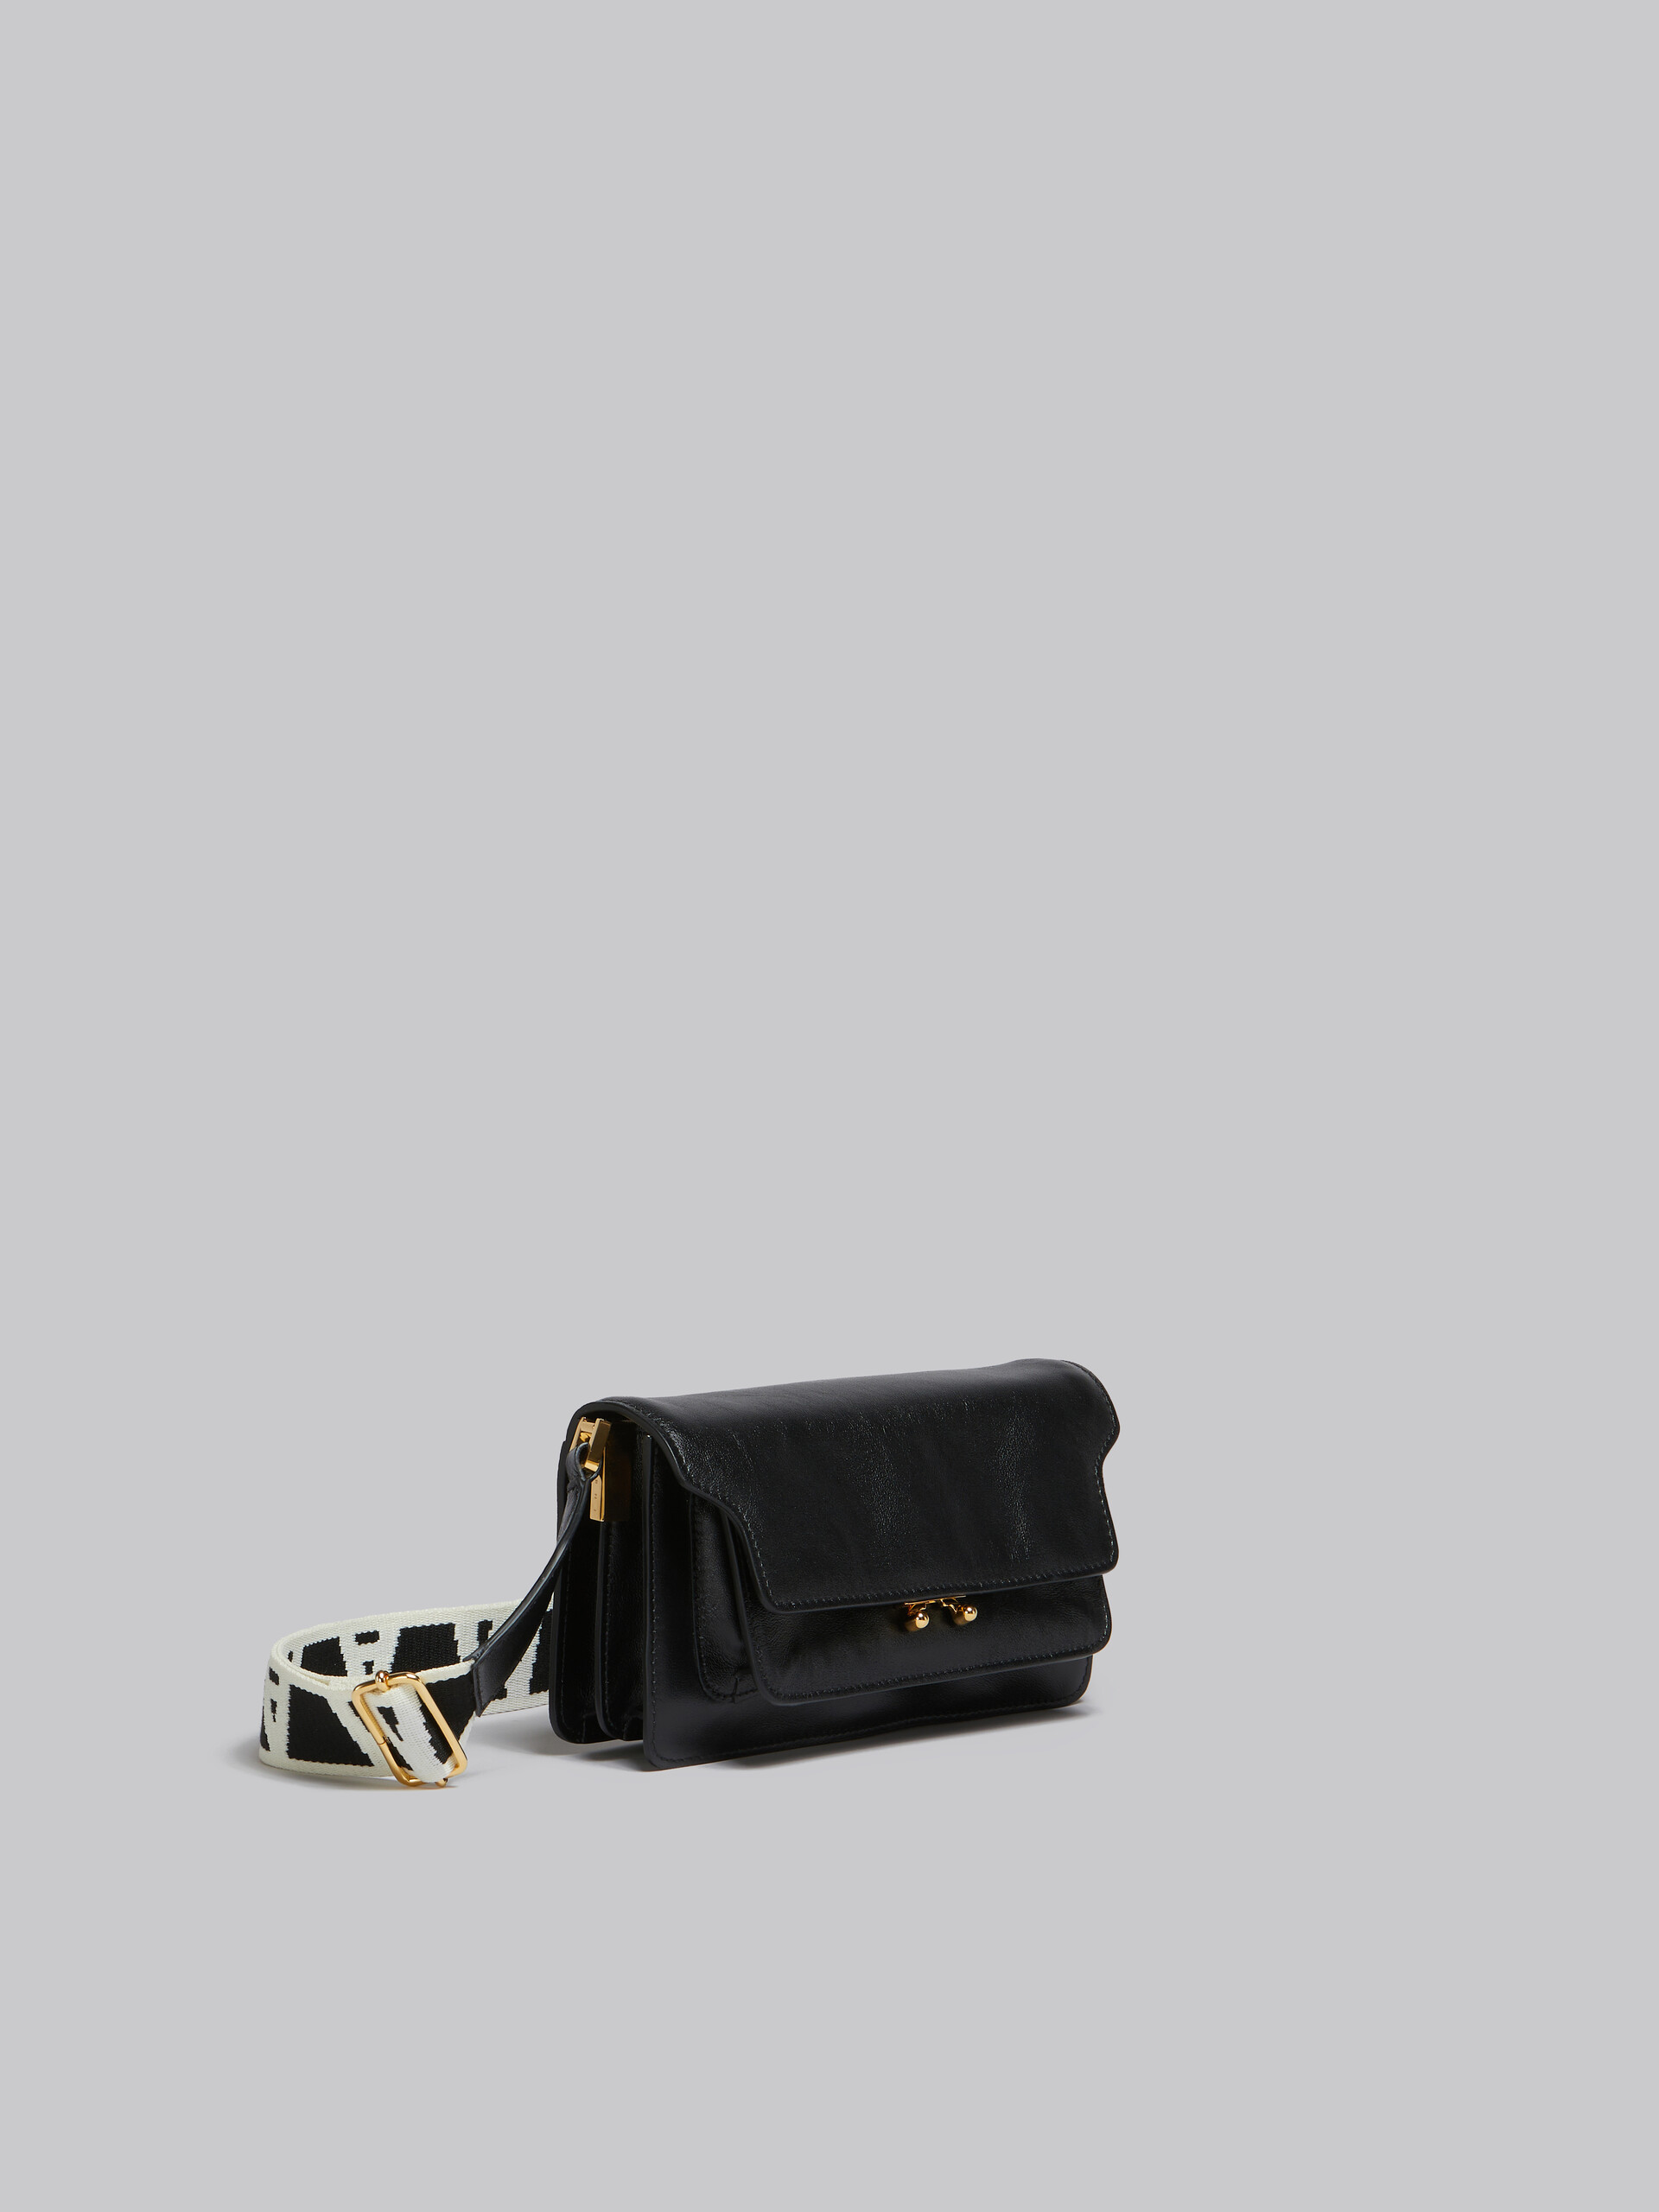 Brown leather E/W Soft Trunk Bag with logo strap - Shoulder Bag - Image 6